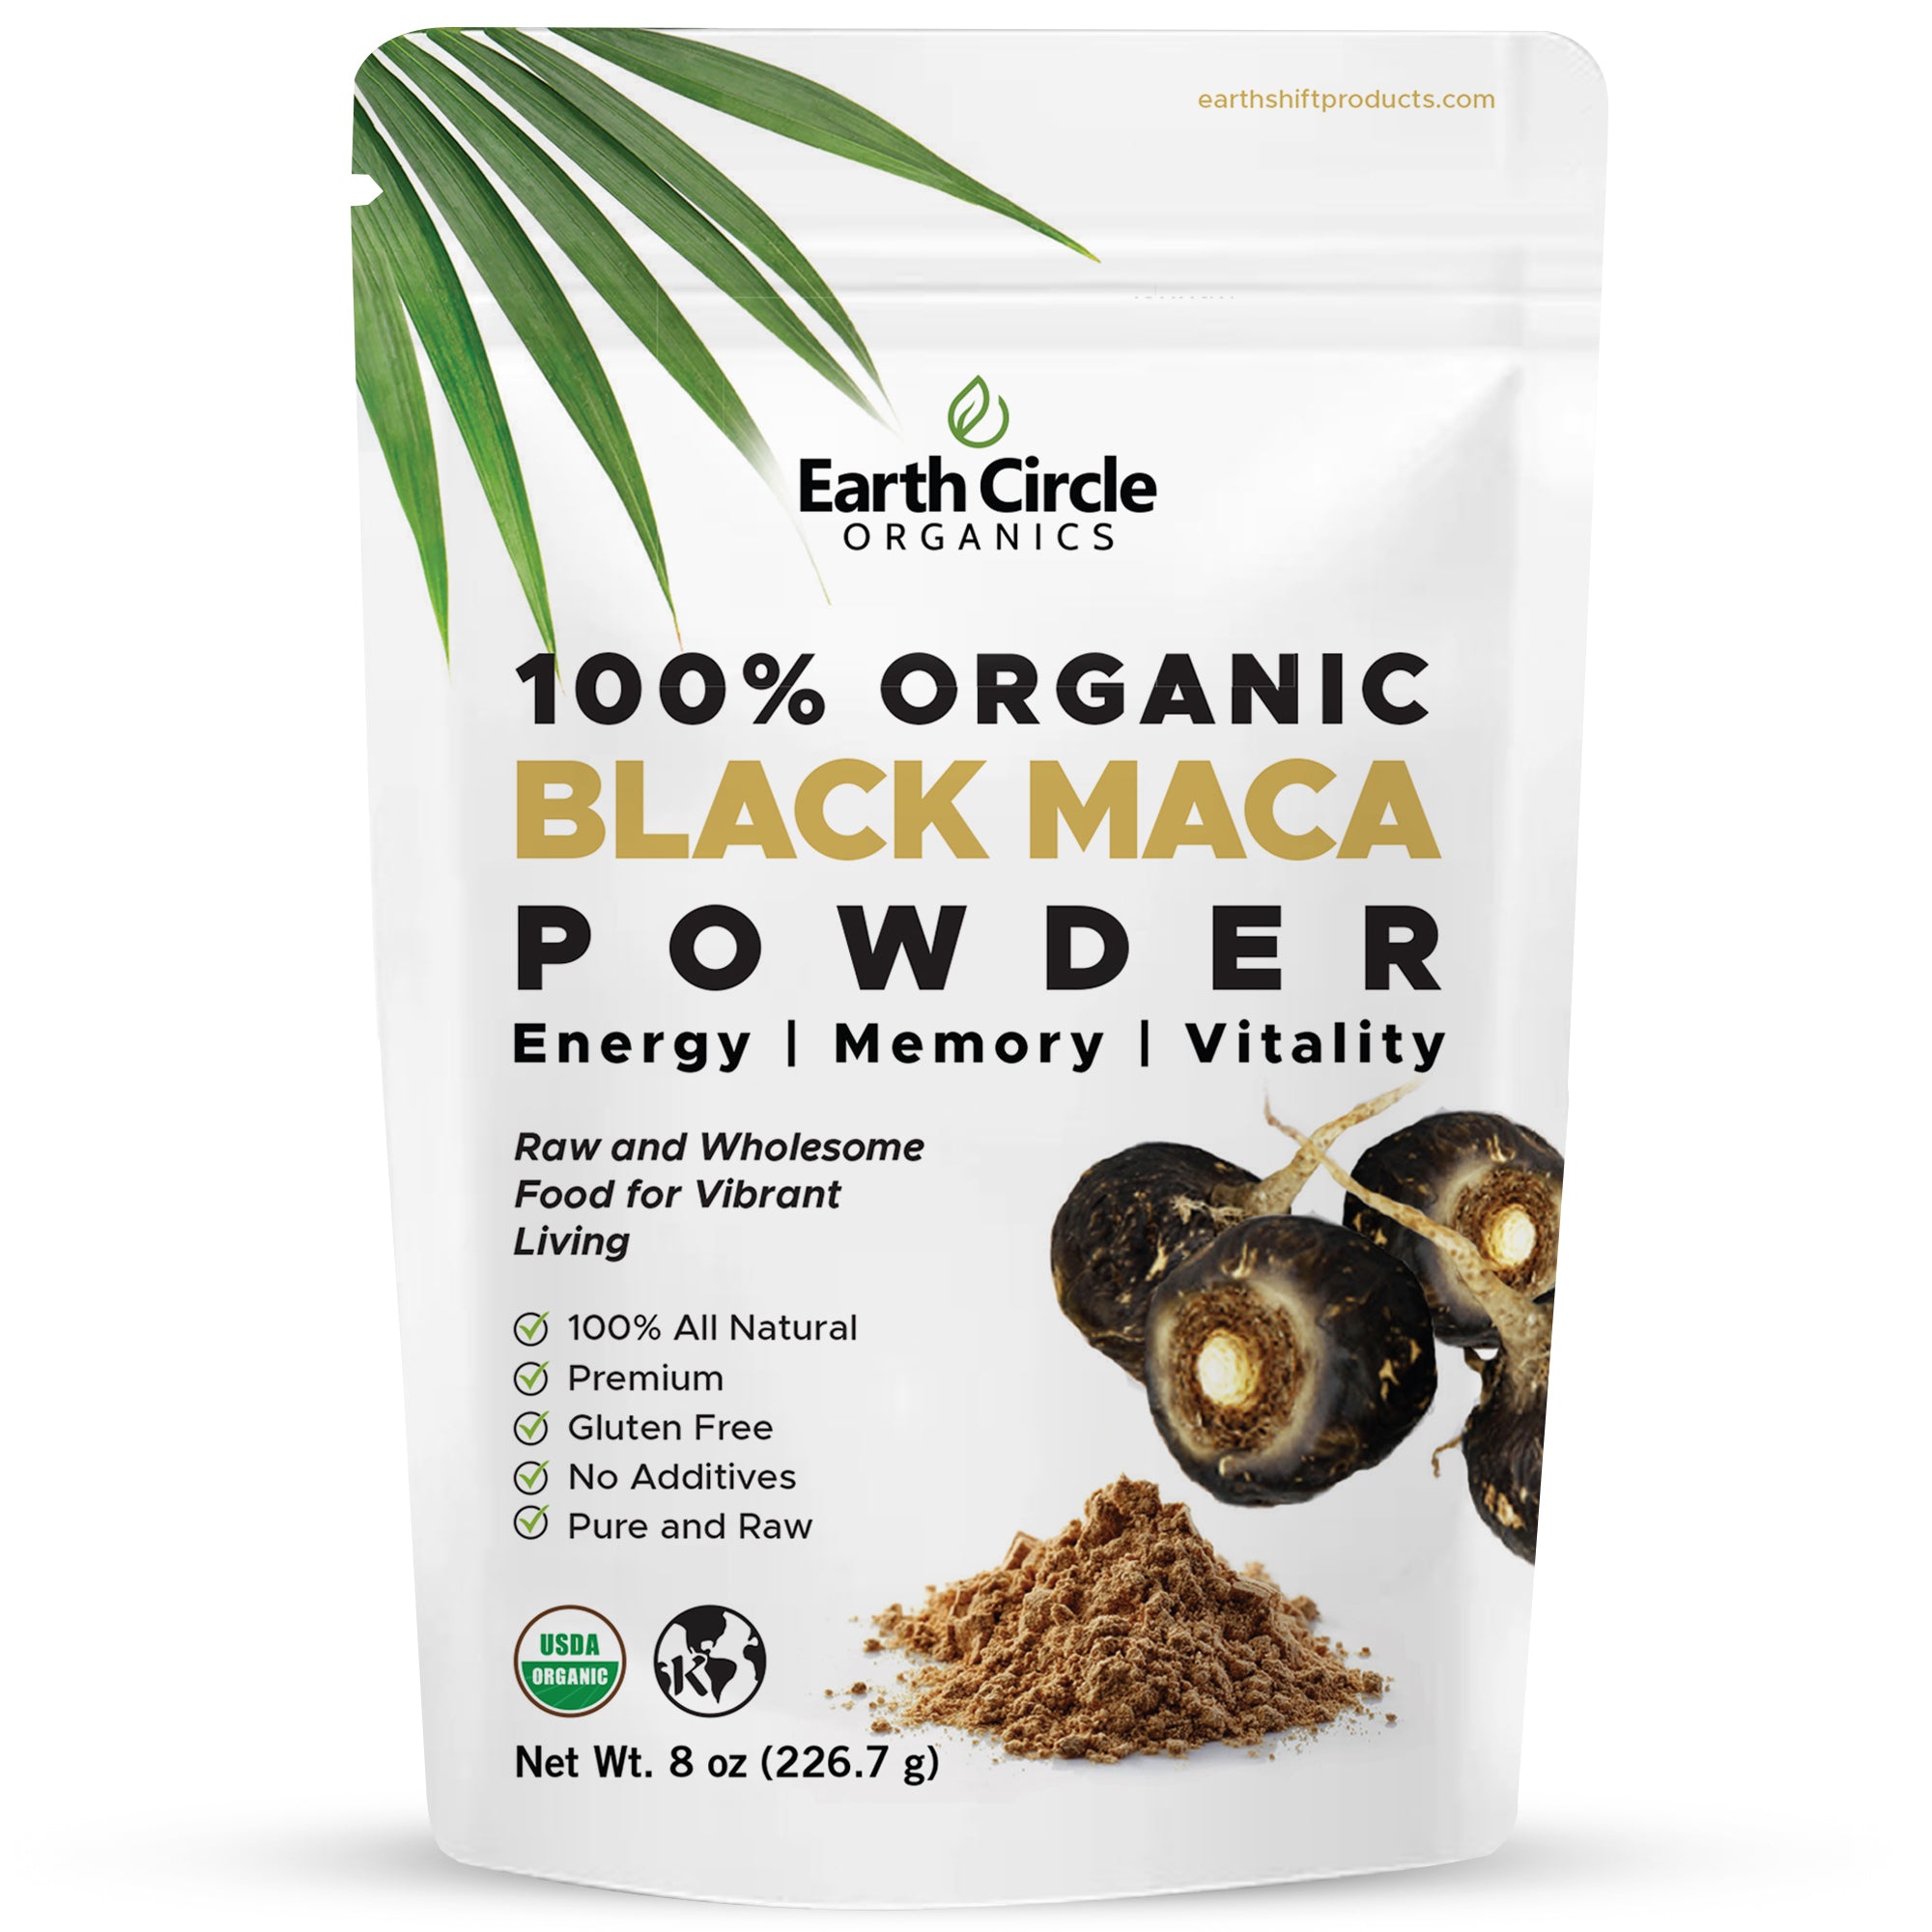 Earth Circle Organics Organic Black Maca Powder - Highest Quality Superfood Extract